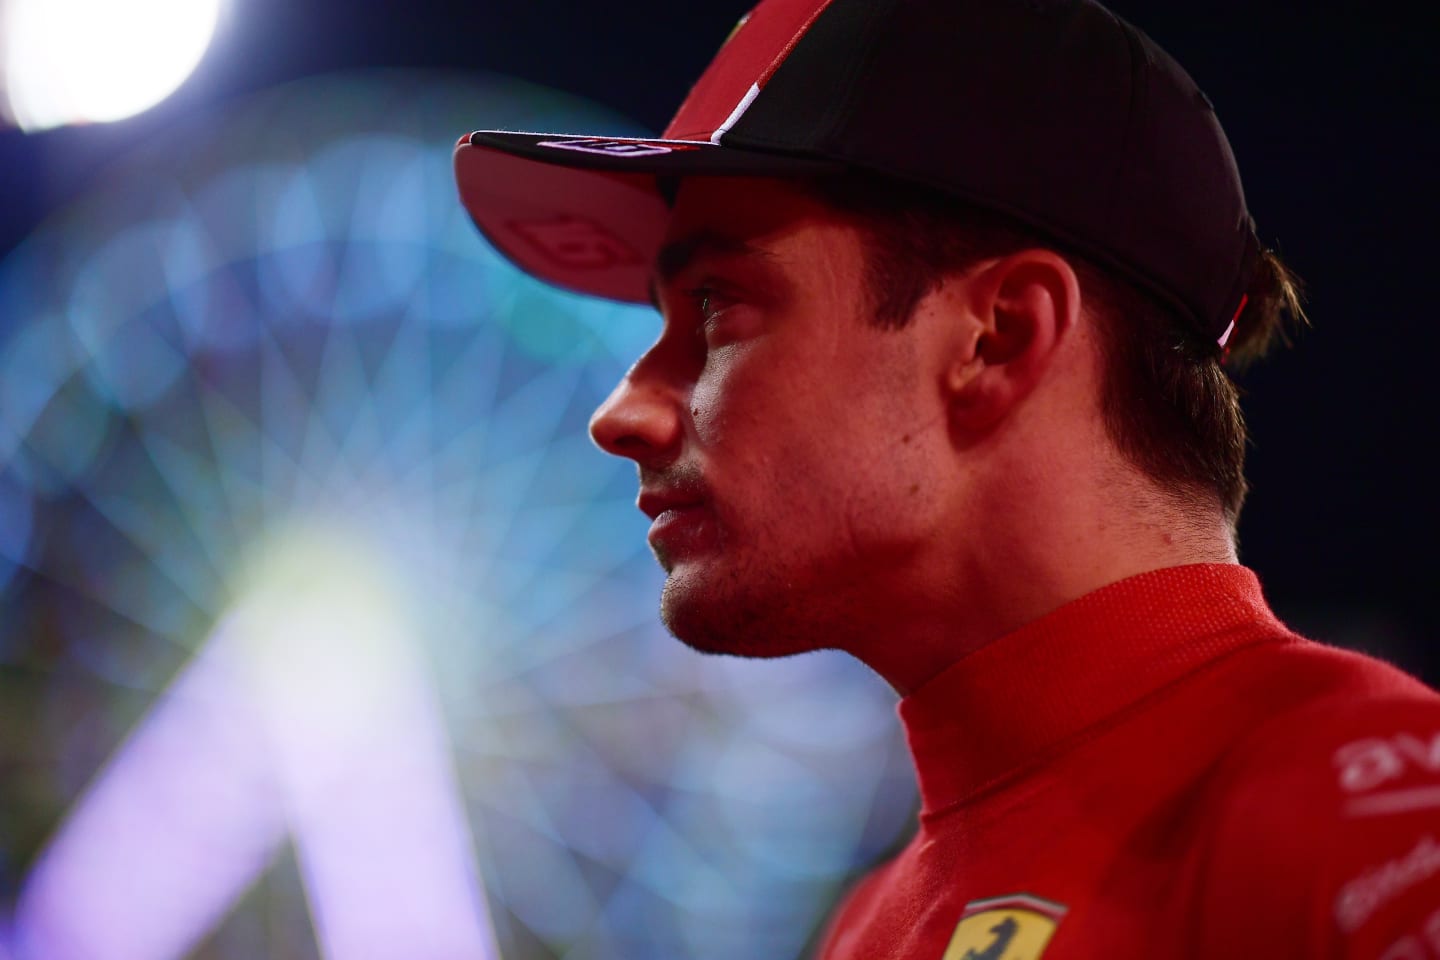 BAHRAIN, BAHRAIN - MARCH 04: Third placed qualifier Charles Leclerc of Monaco and Ferrari looks on